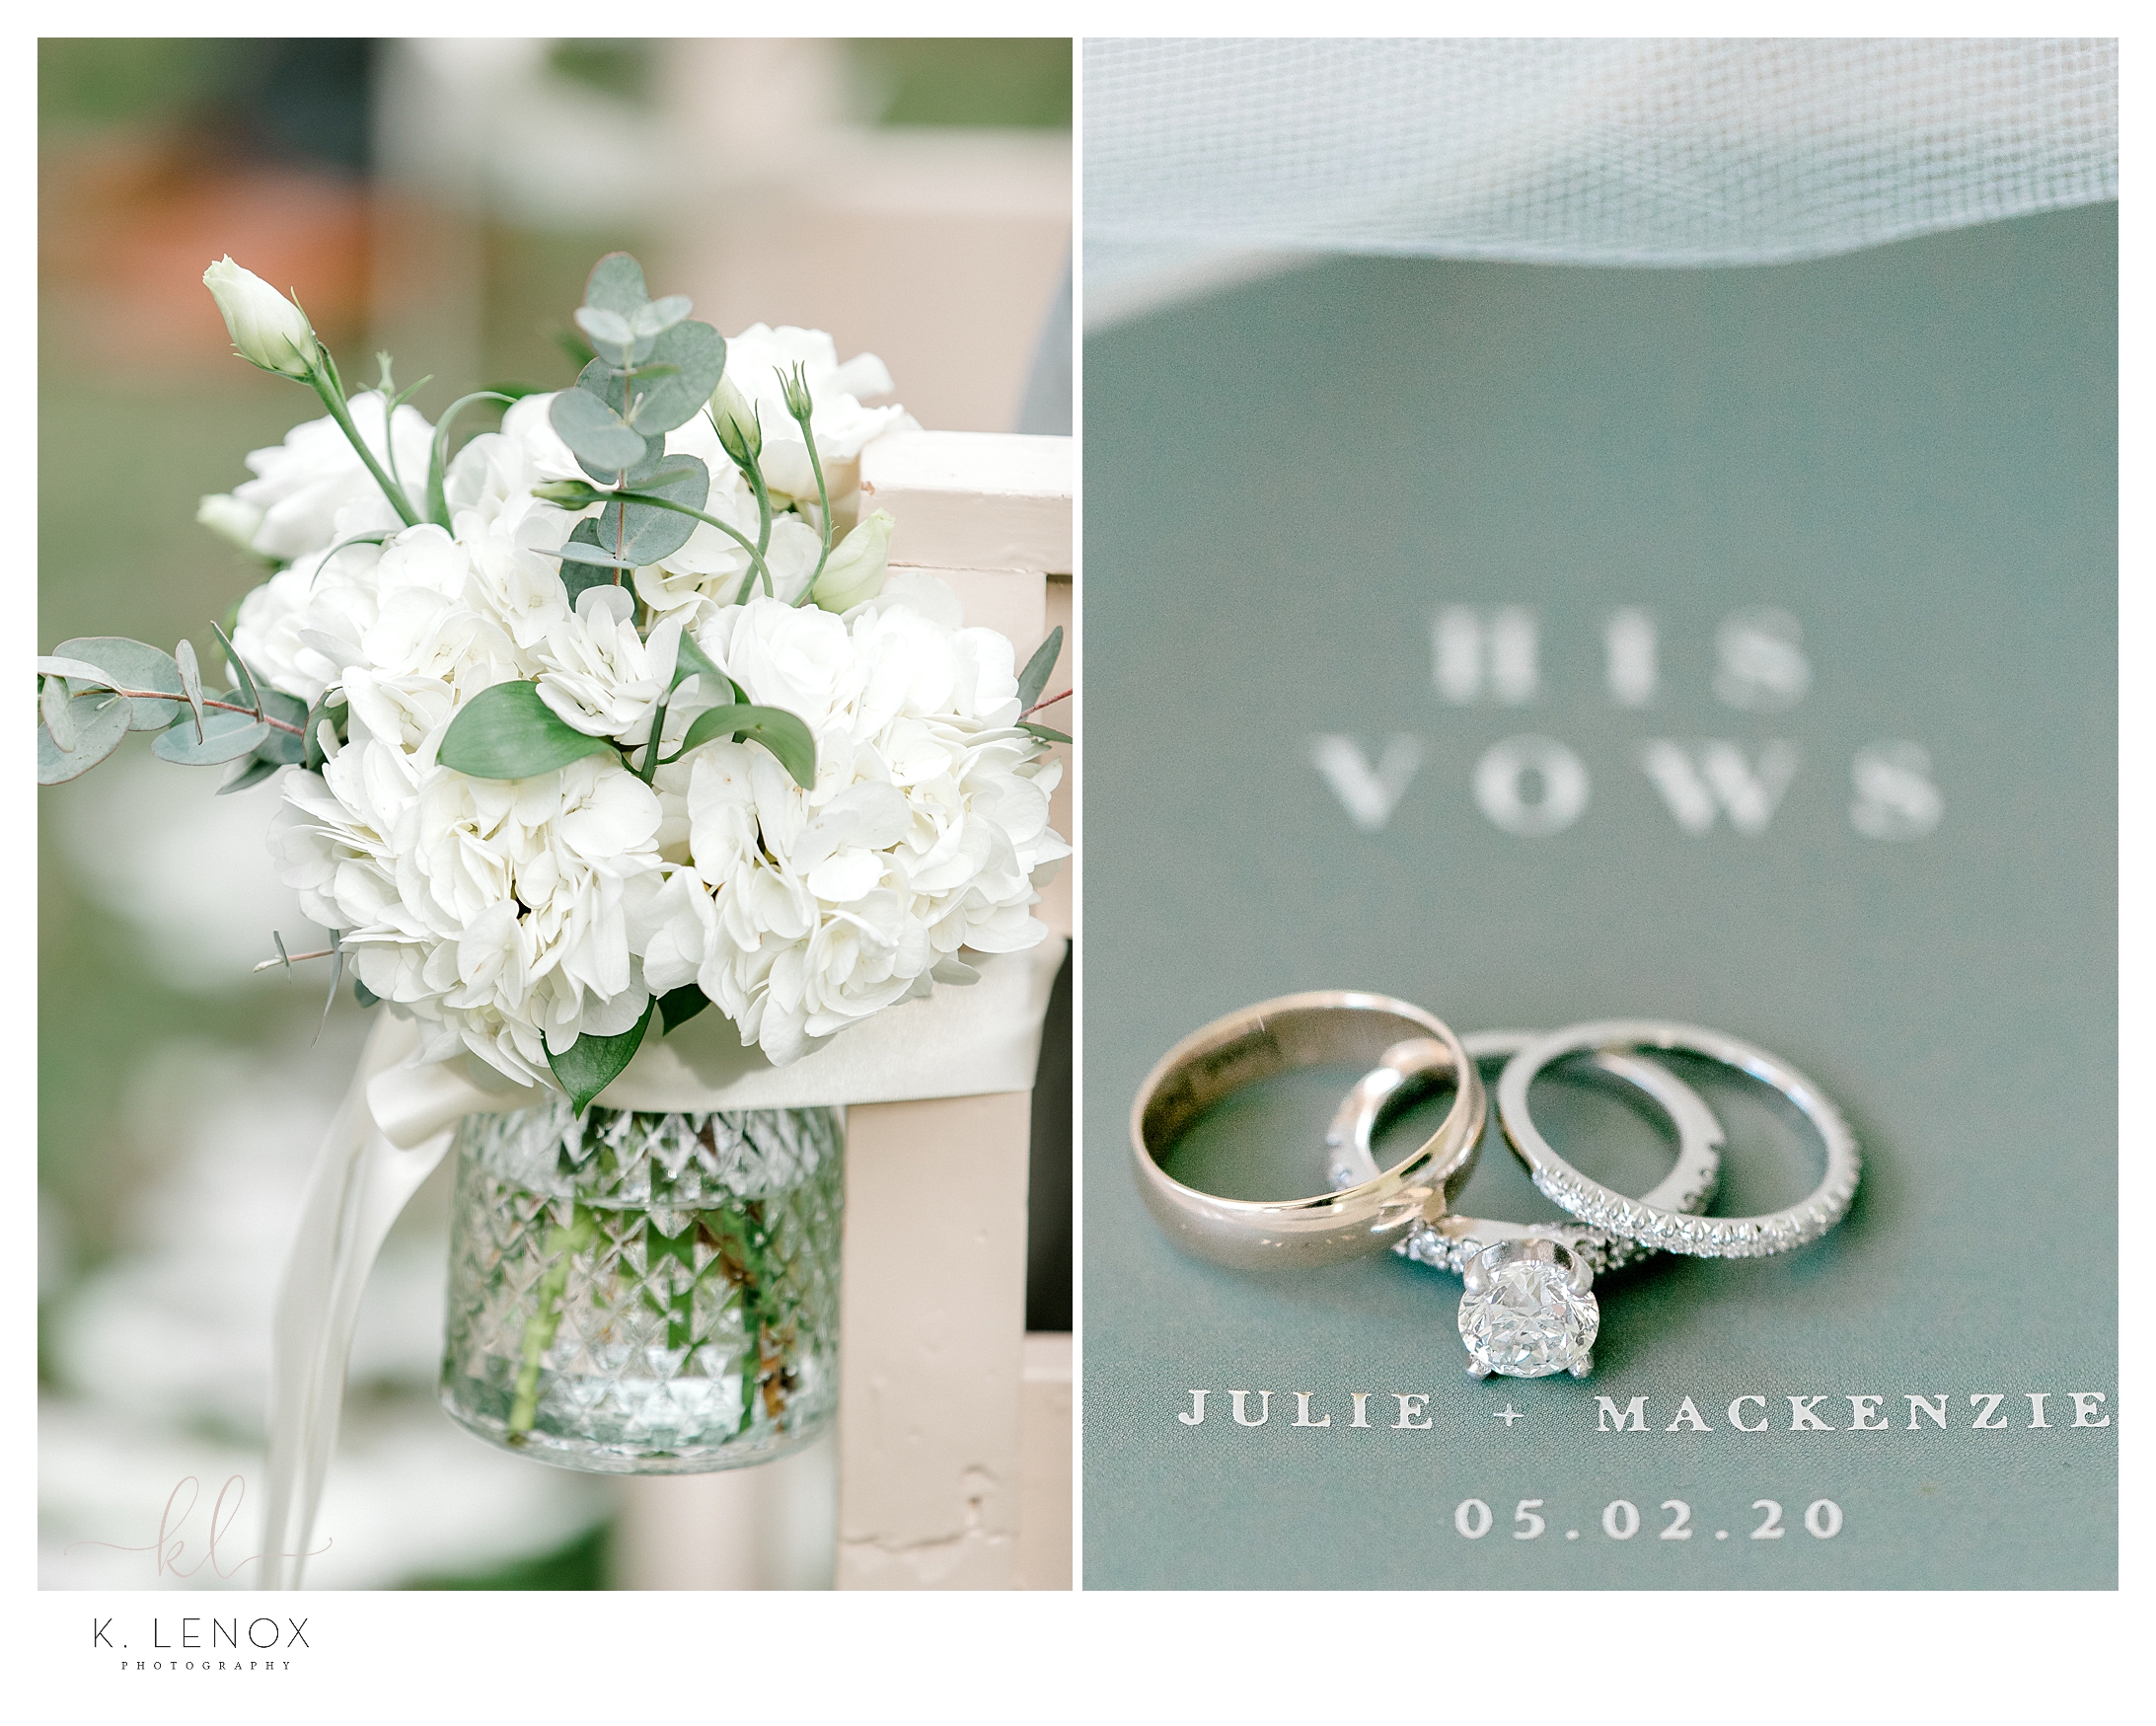 Beautiful Backyard Micro Wedding - Detail photos showing white flowers and wedding rings. 